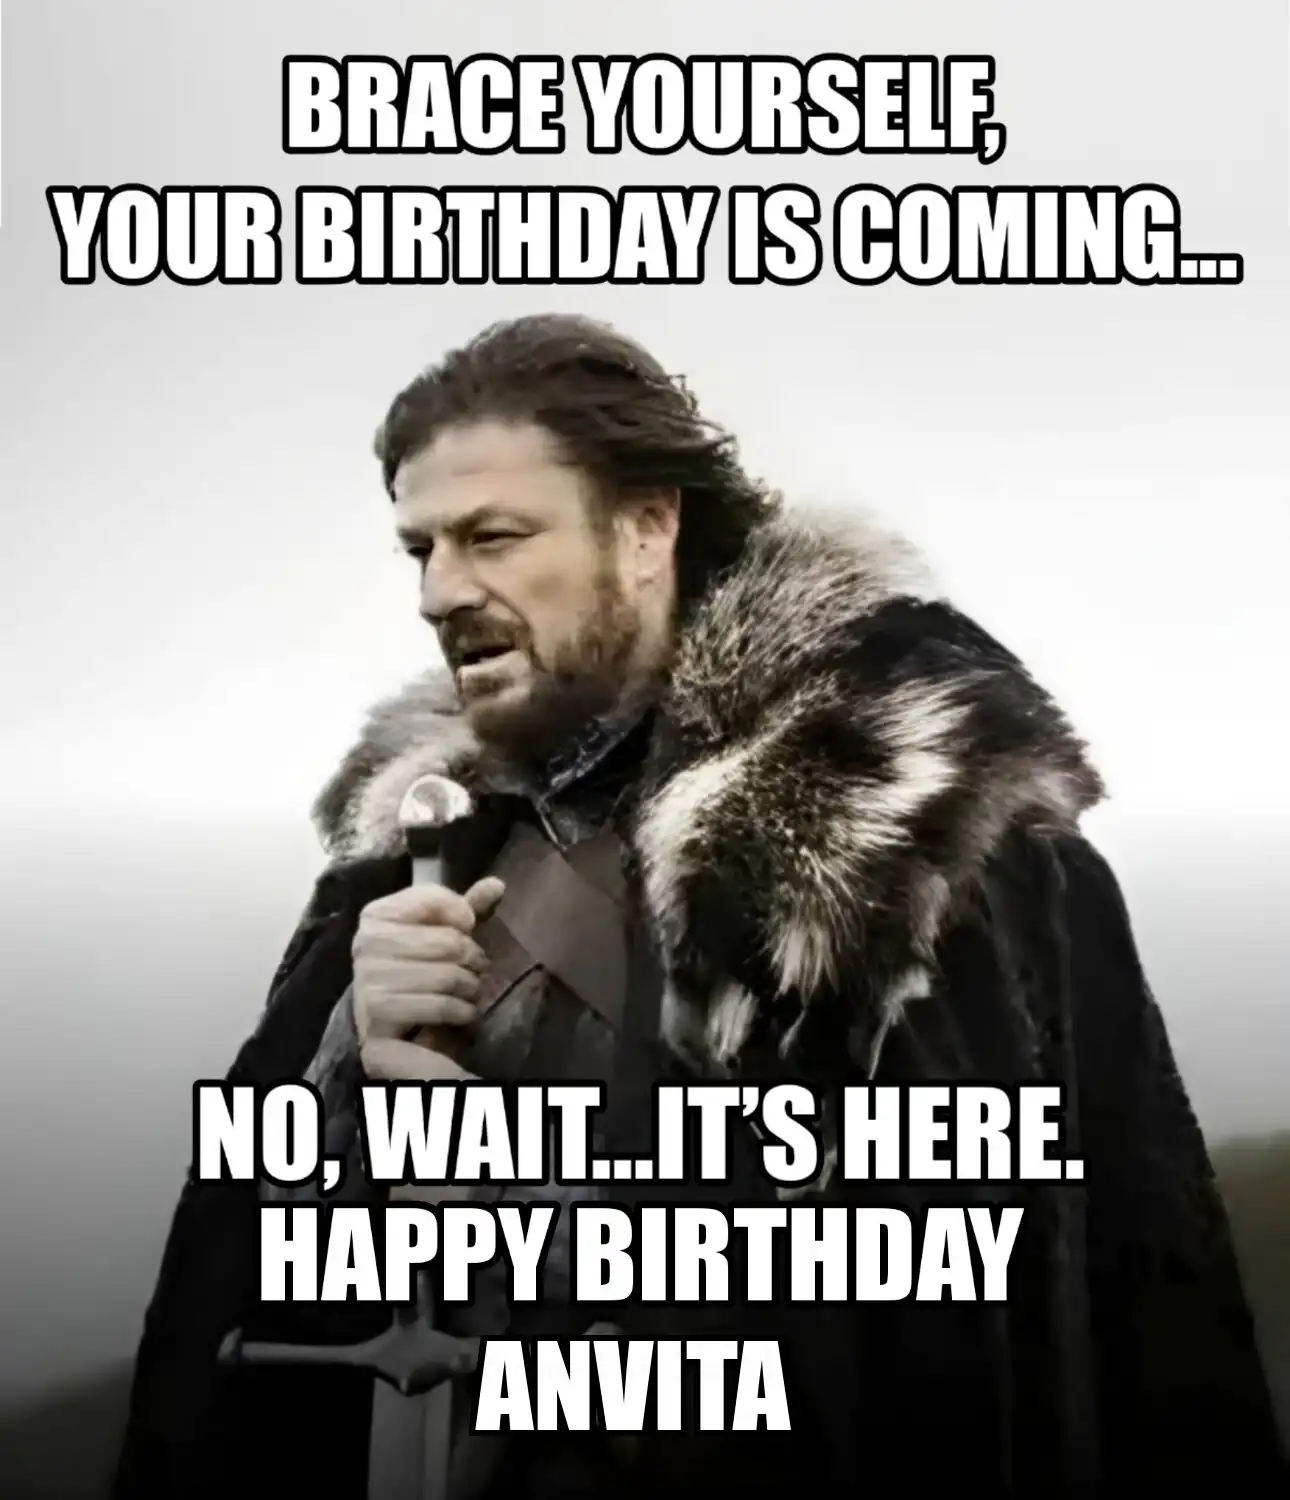 Happy Birthday Anvita Brace Yourself Your Birthday Is Coming Meme